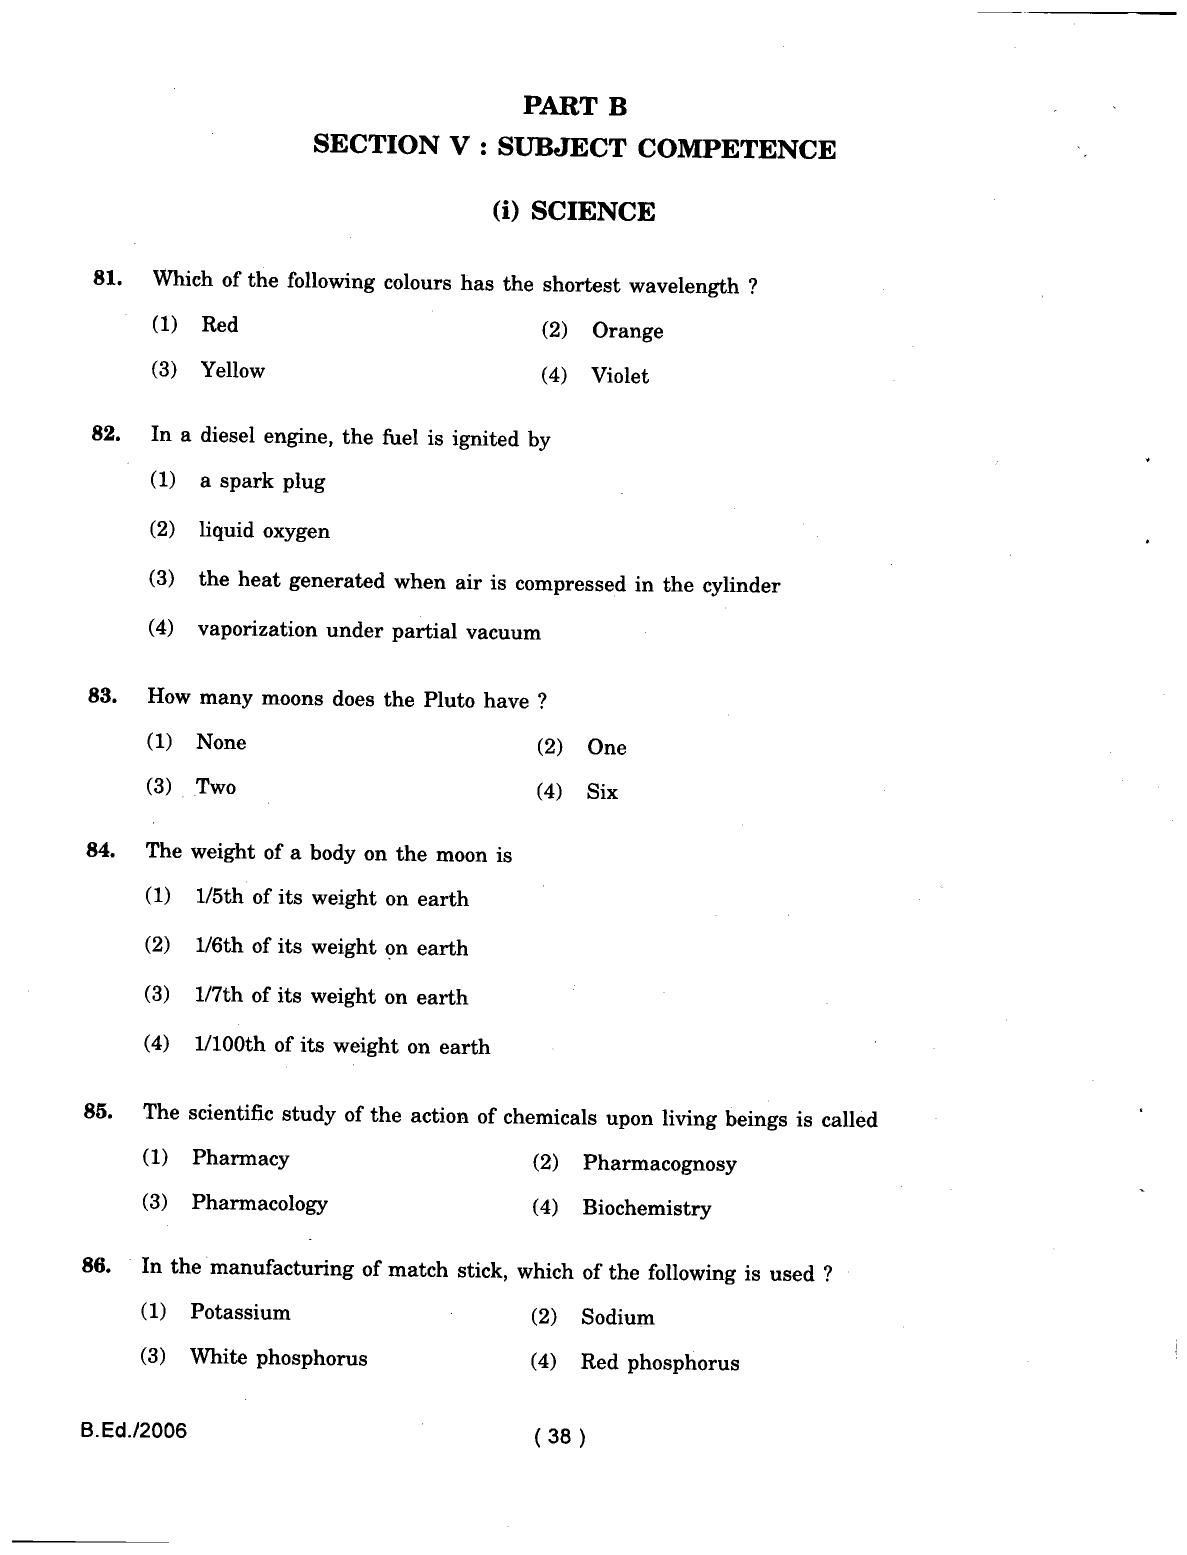 IGNOU B.Ed 2006 Question Paper - Page 38